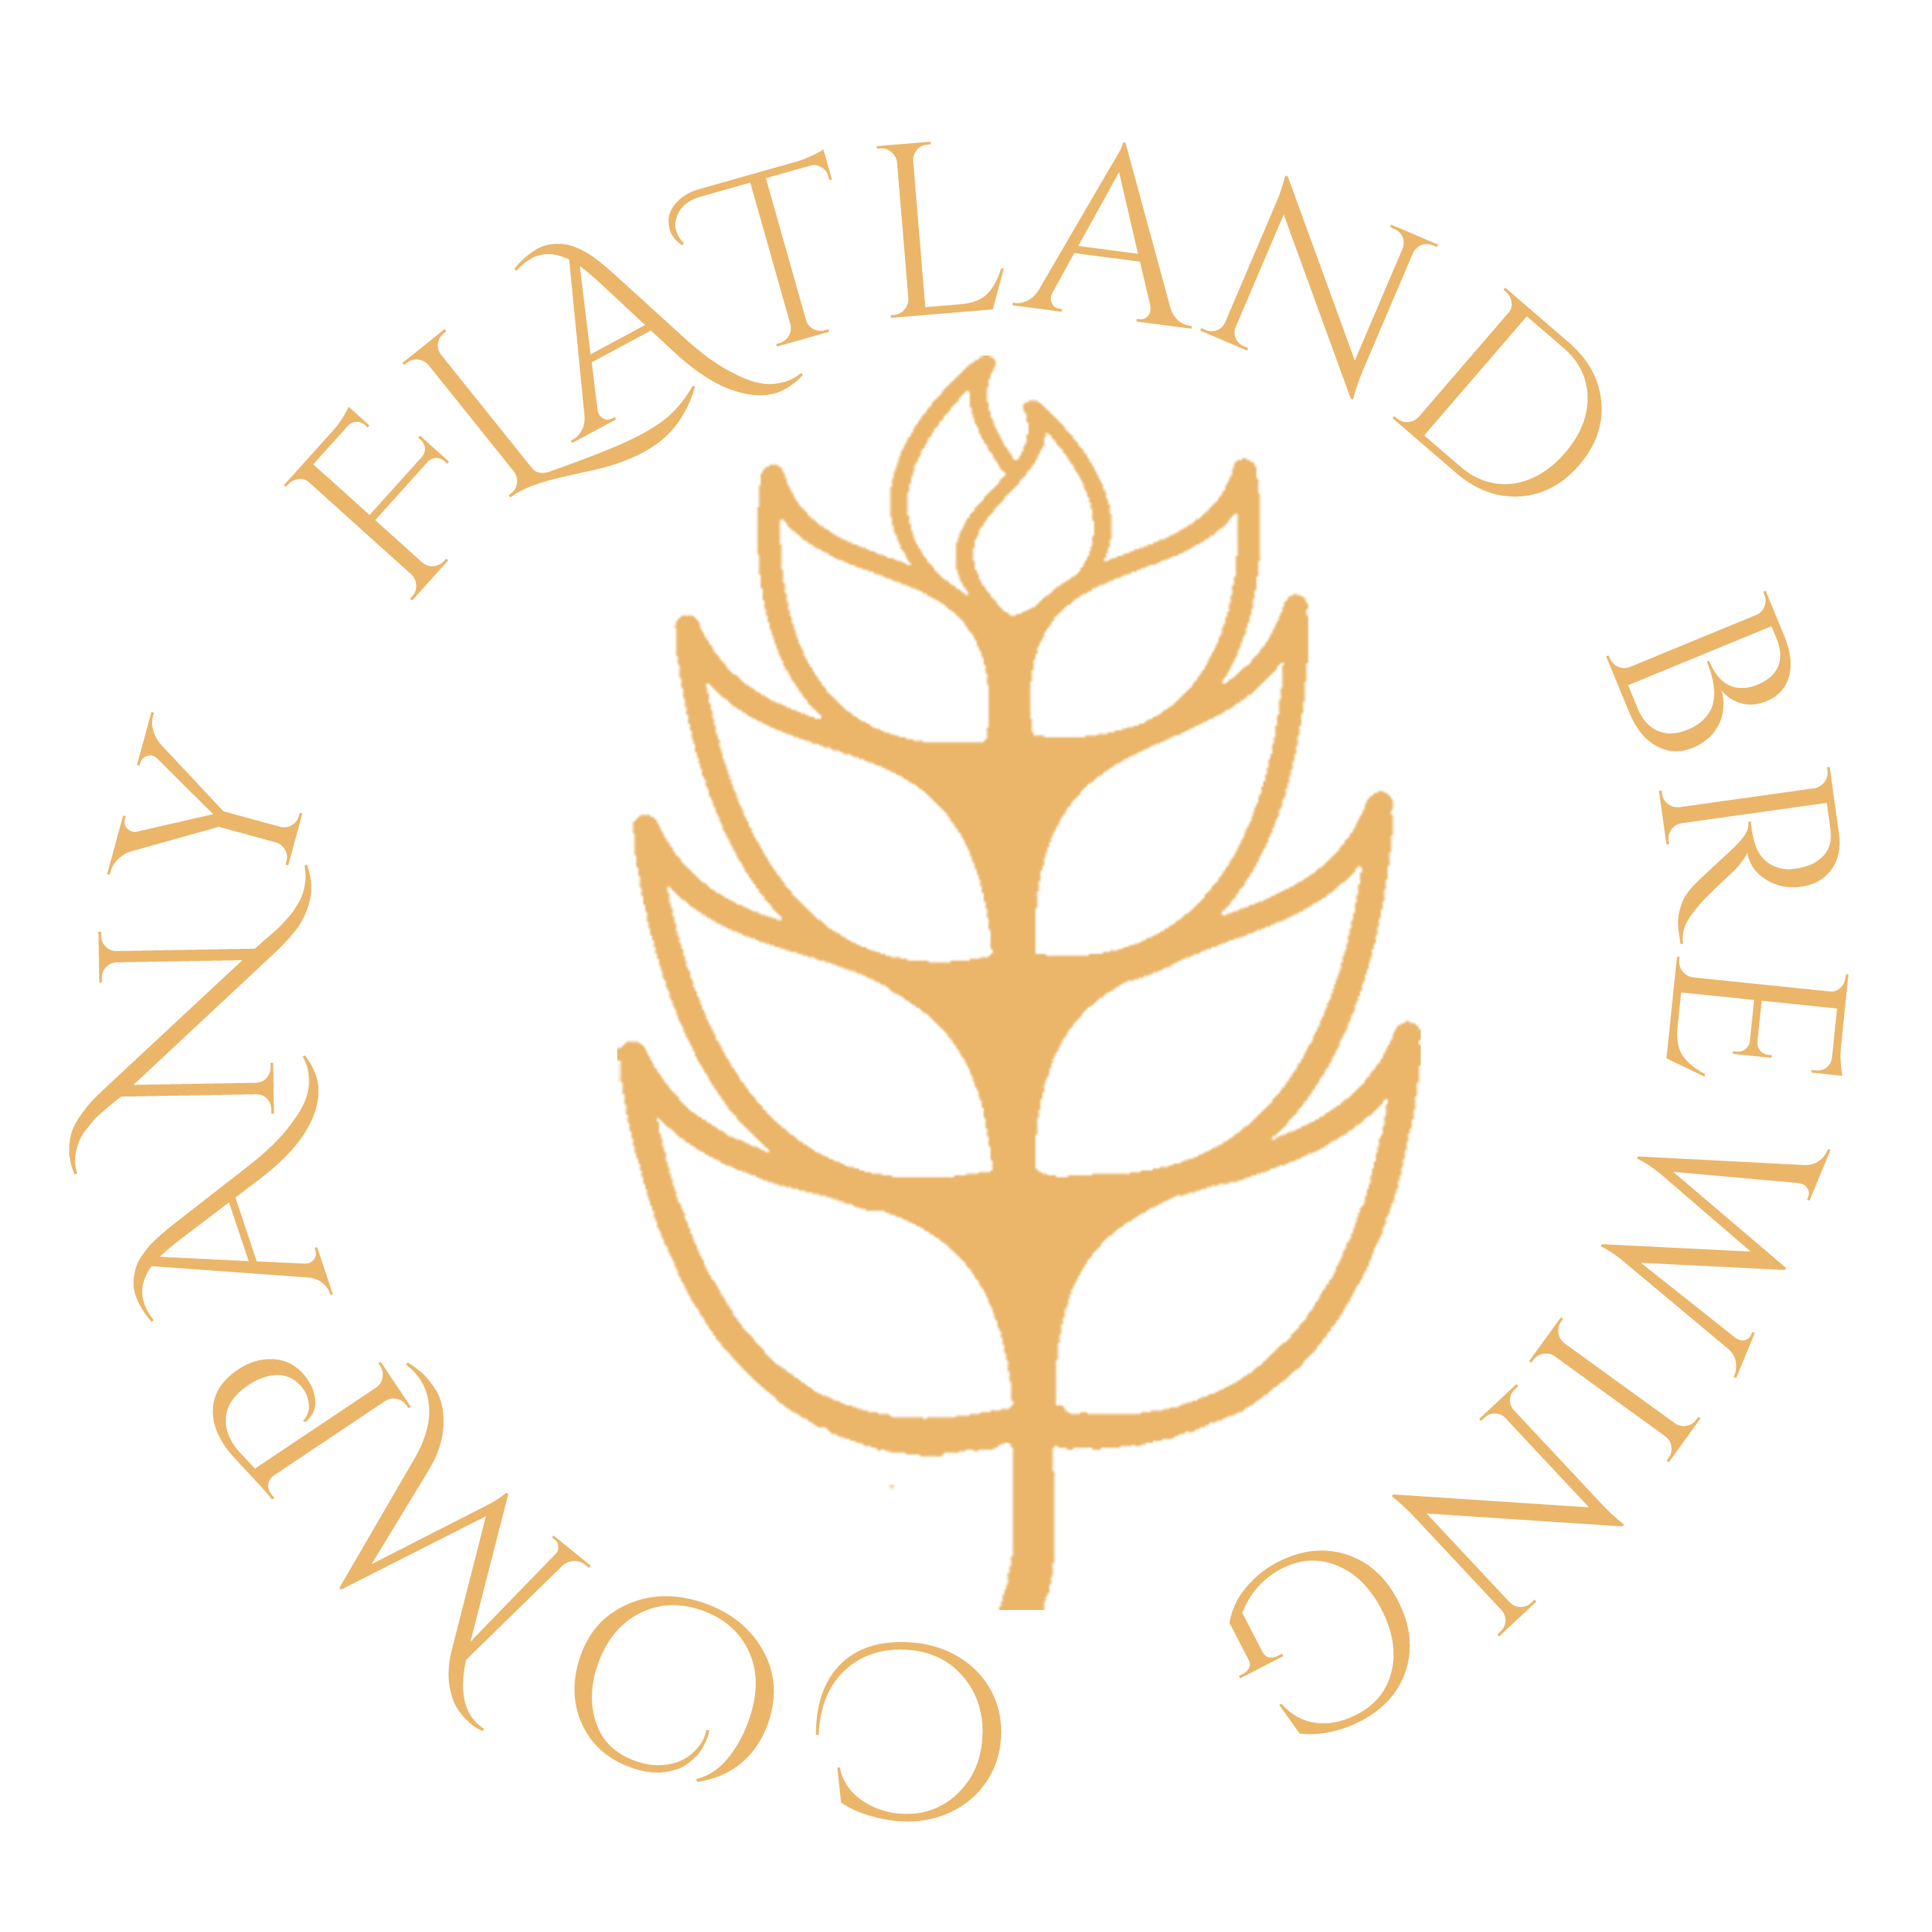 Flatland Brewing Company